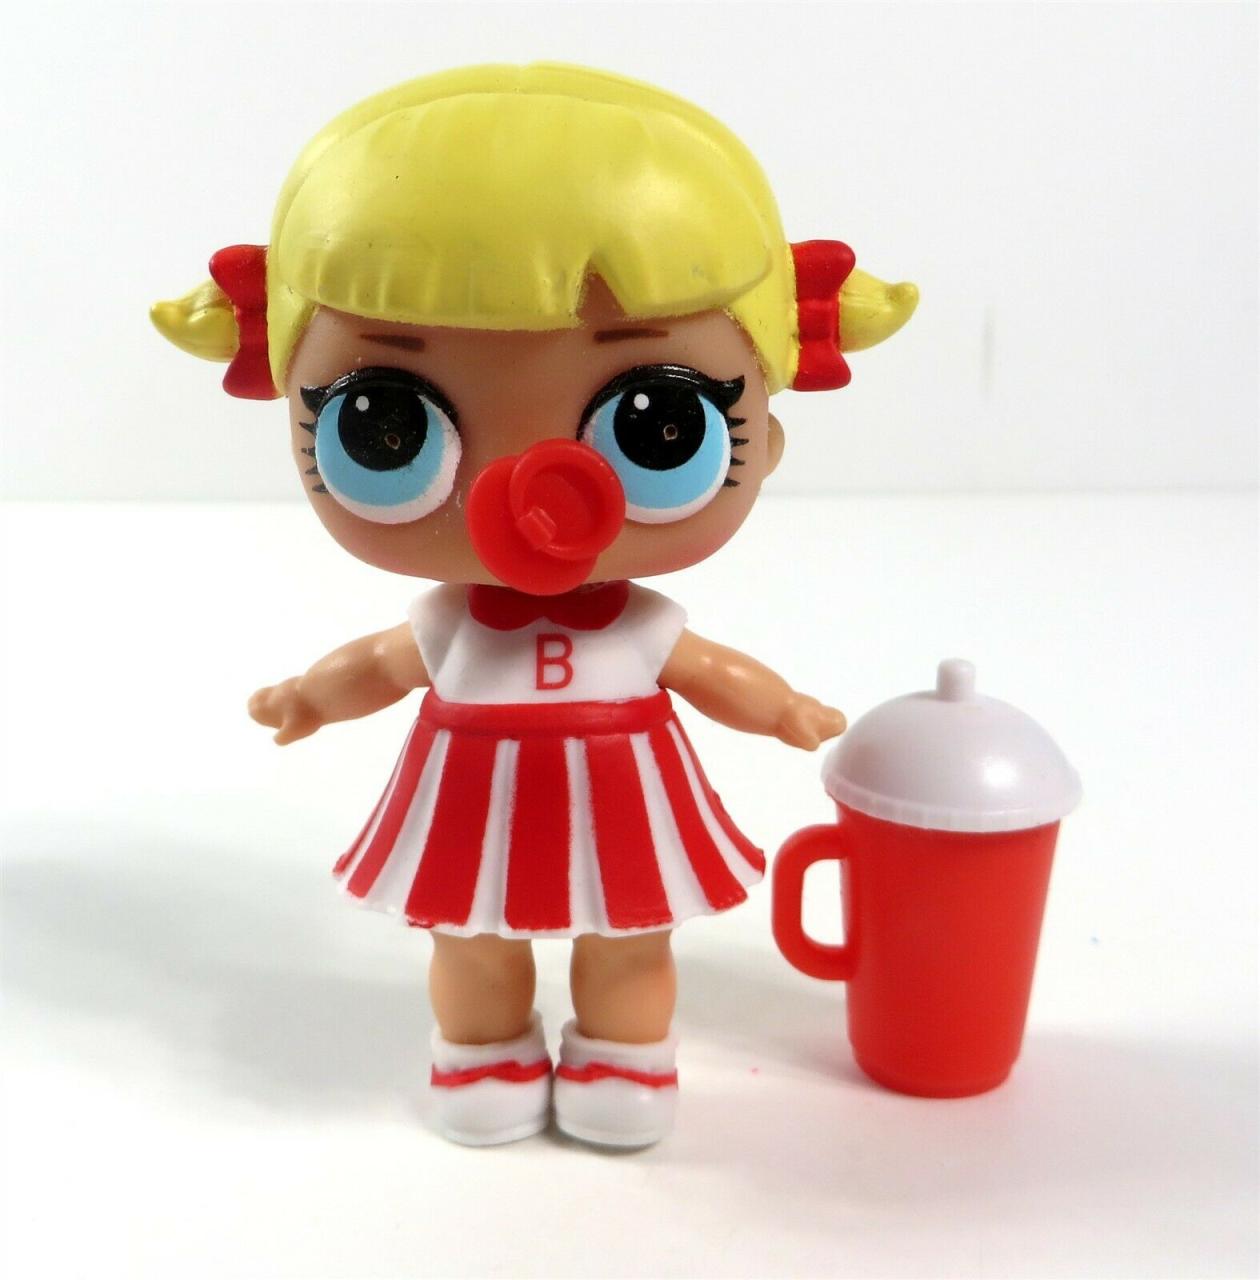 Cheer Captain Lol Surprise! Dolls Series 1 Cheer Captain Doll